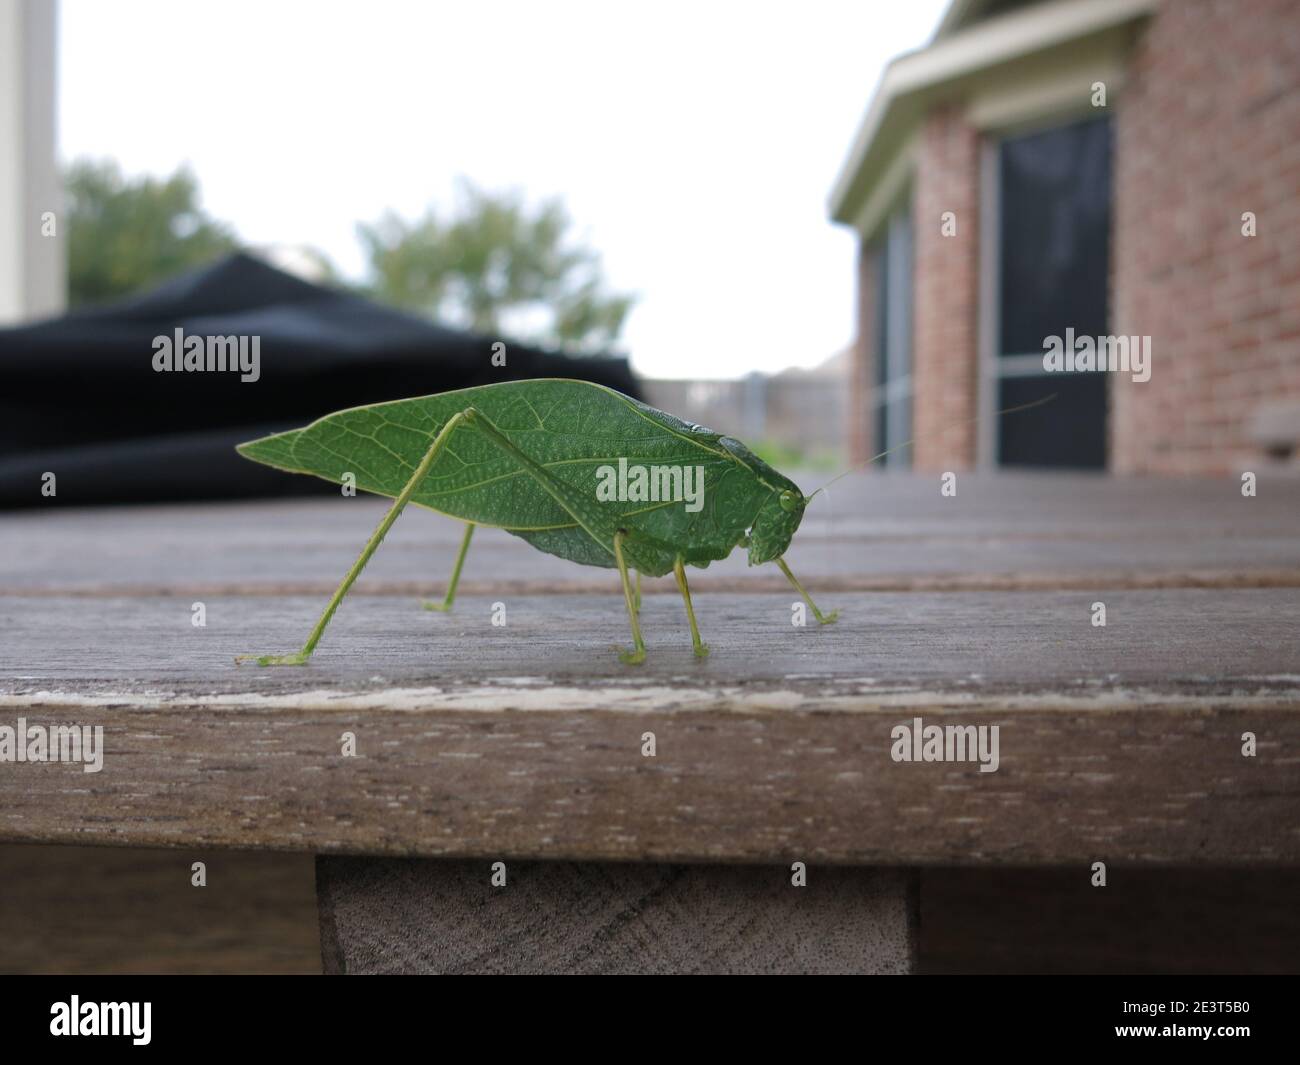 side view close-up of a leaf-shaped Katydid cricket (Tettigoniidae) sitting on garden furniture Stock Photo